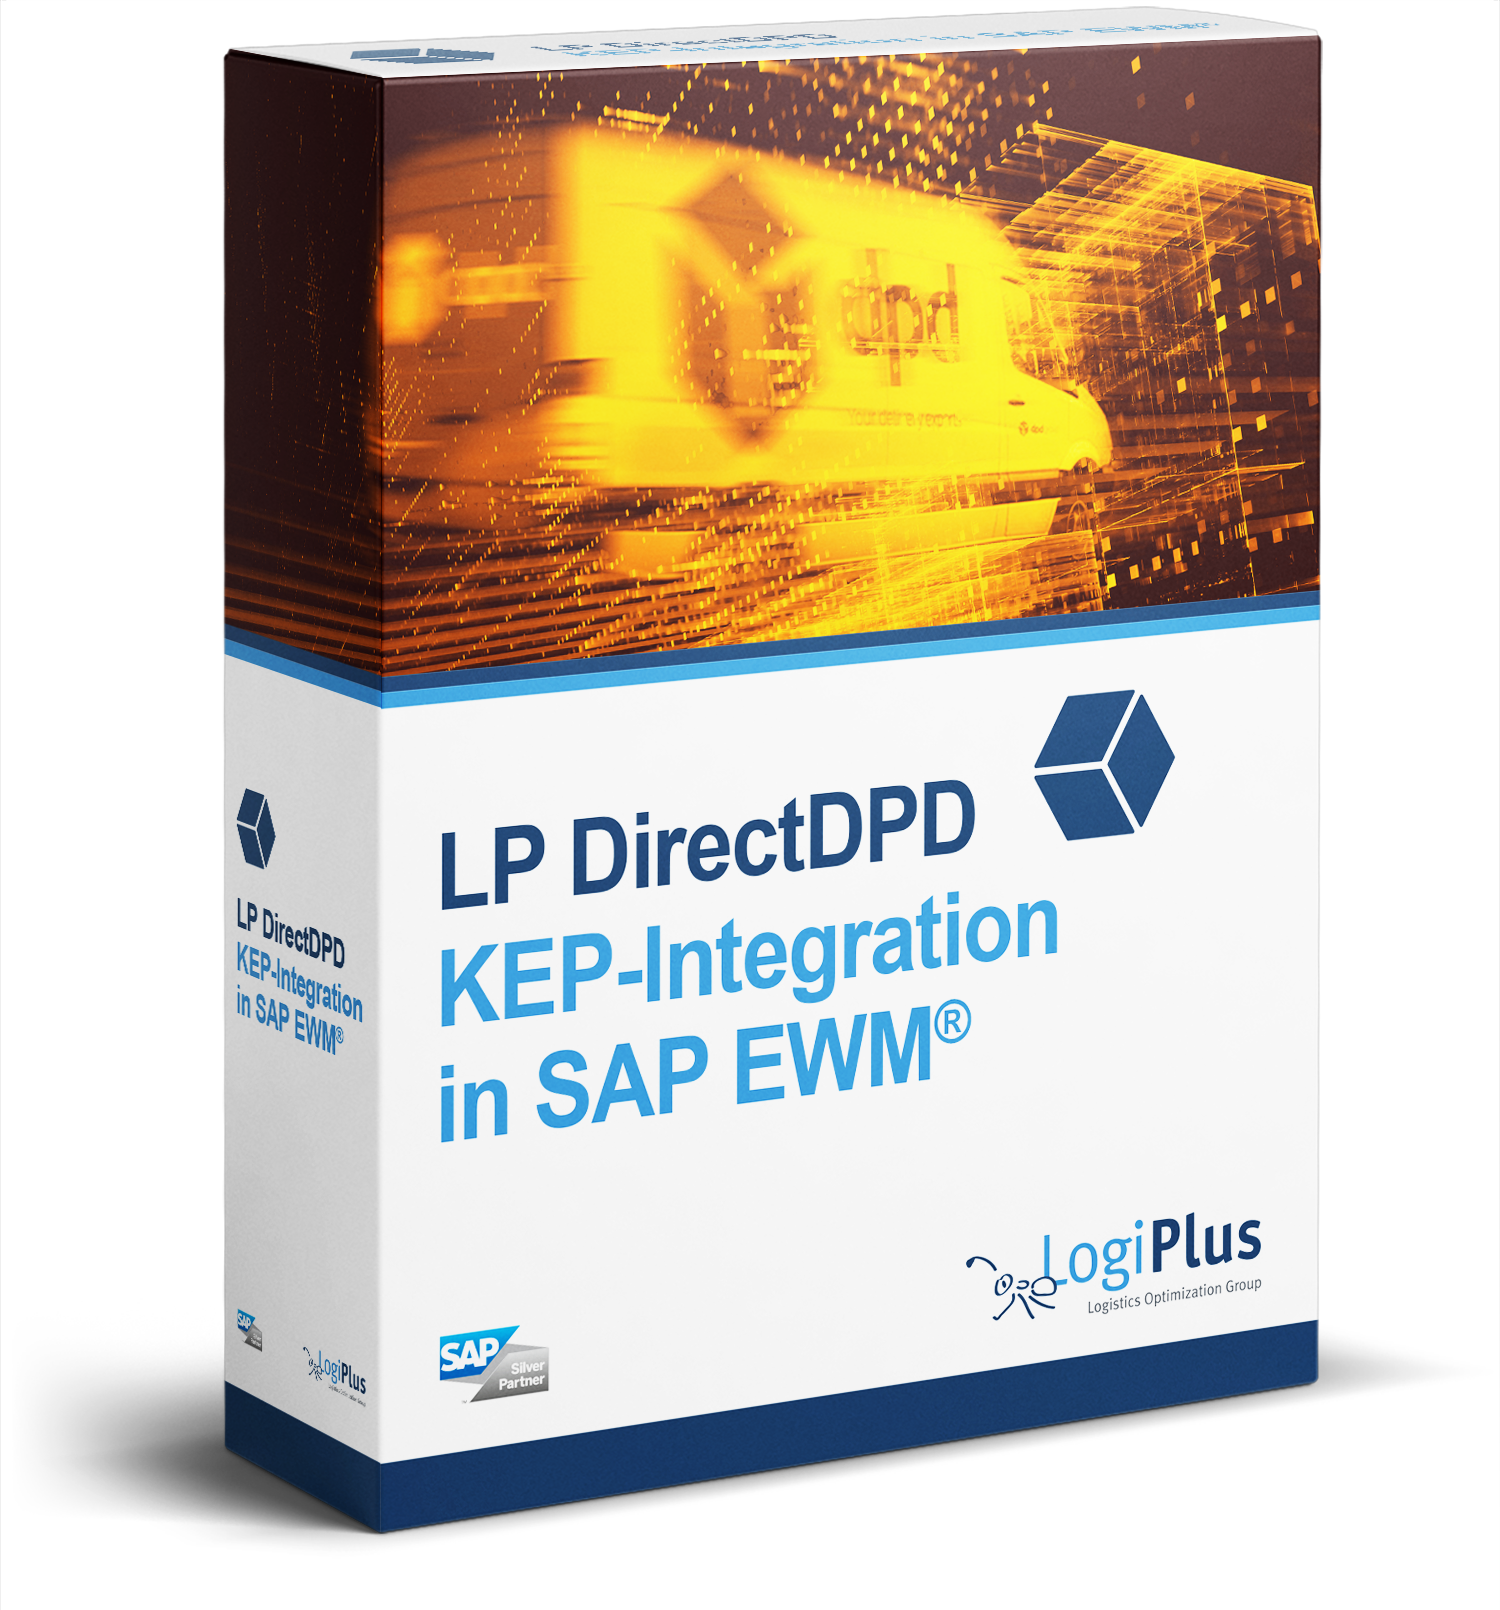 LP DirectDPD